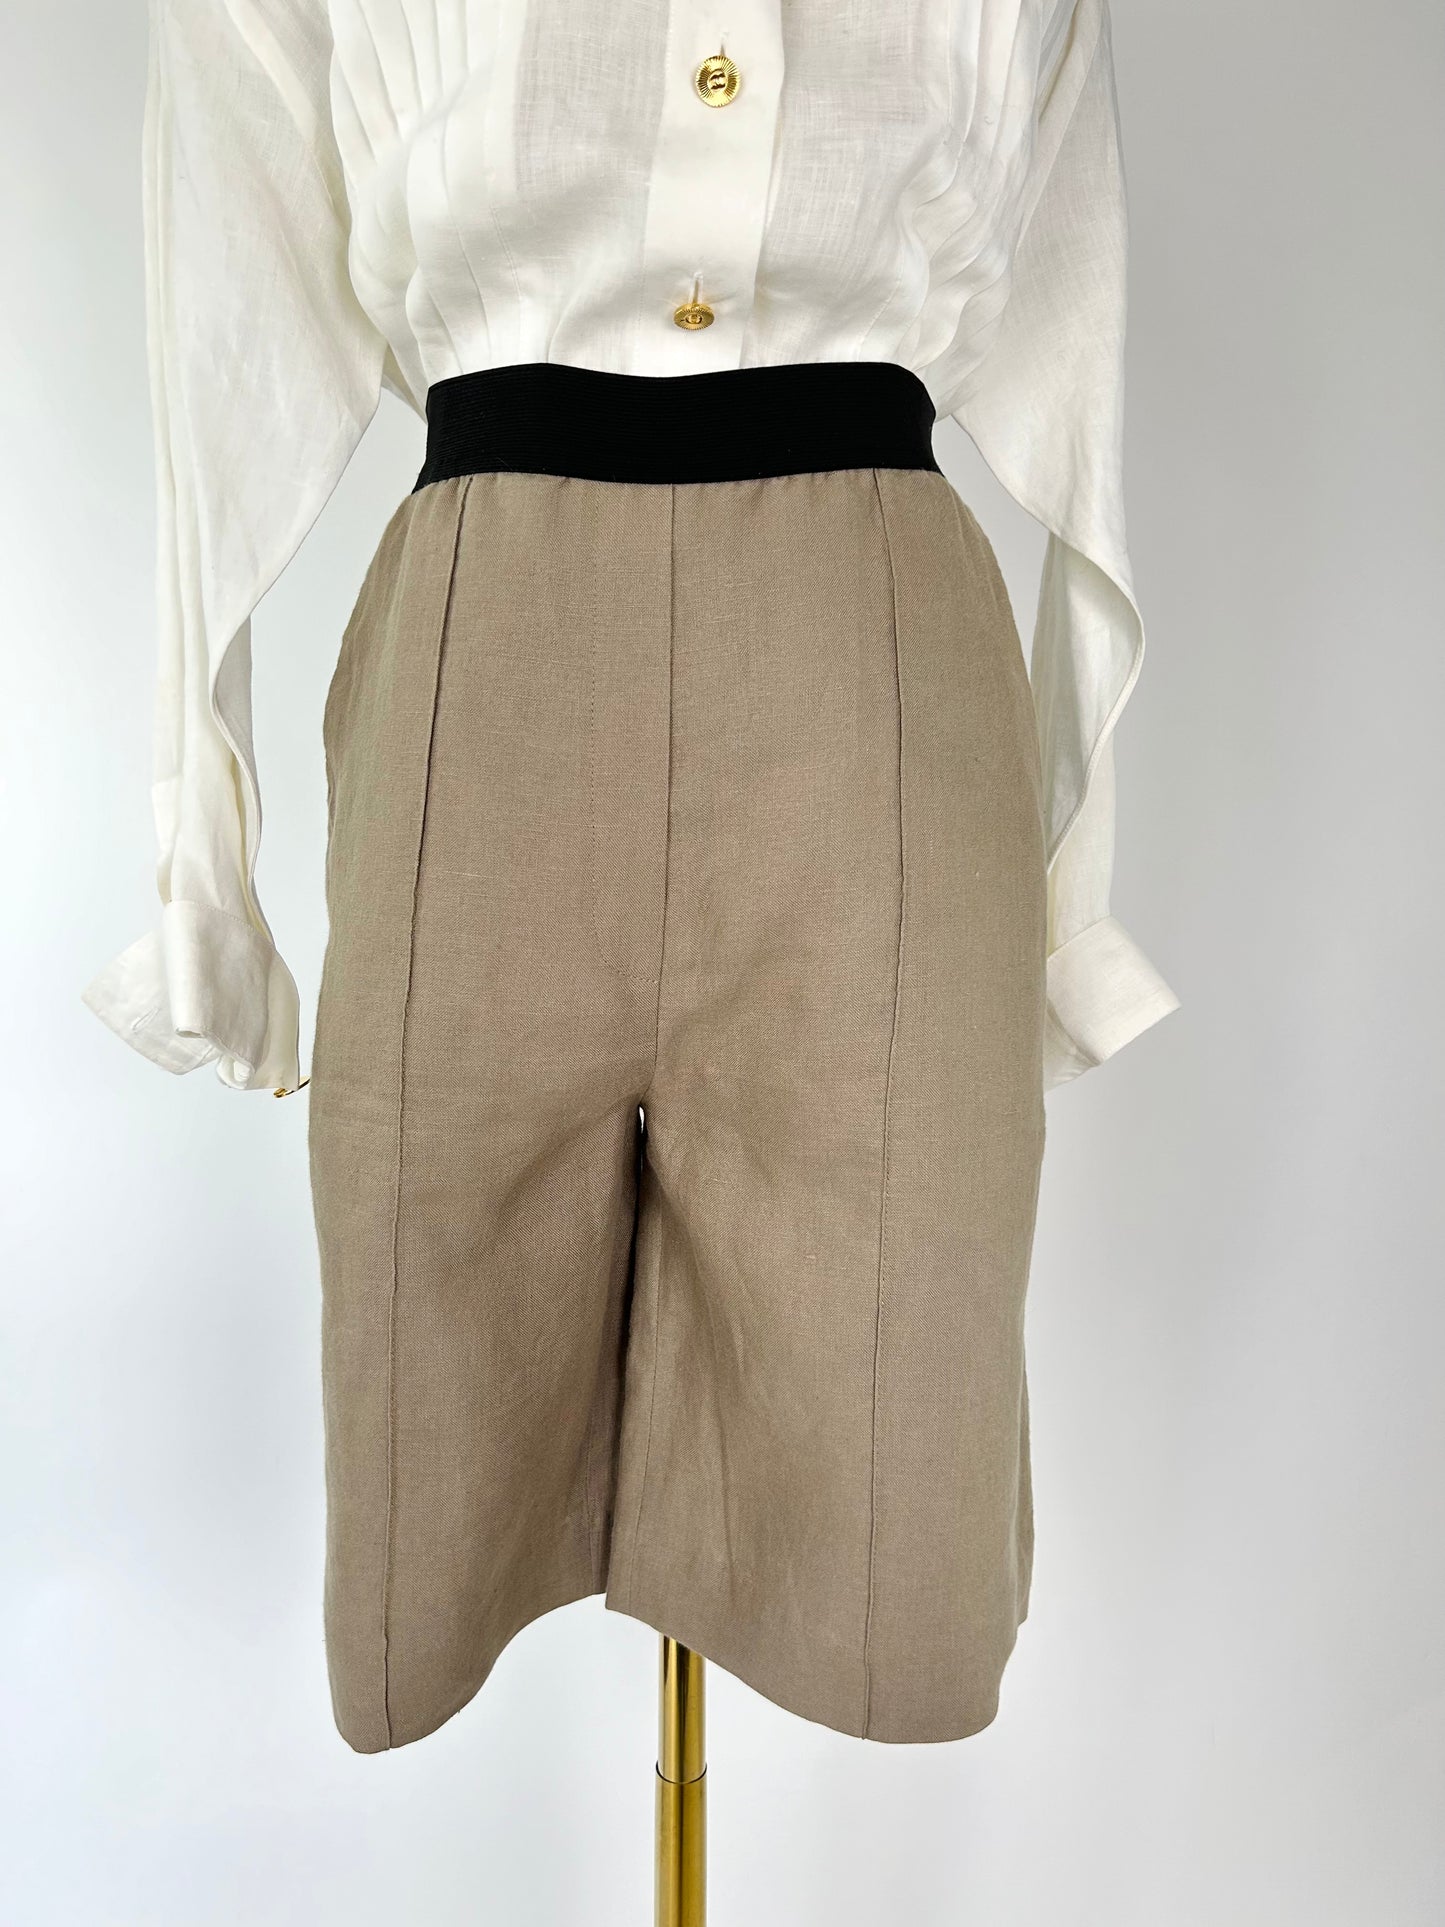 LouLou Studio Tan Linen Shorts